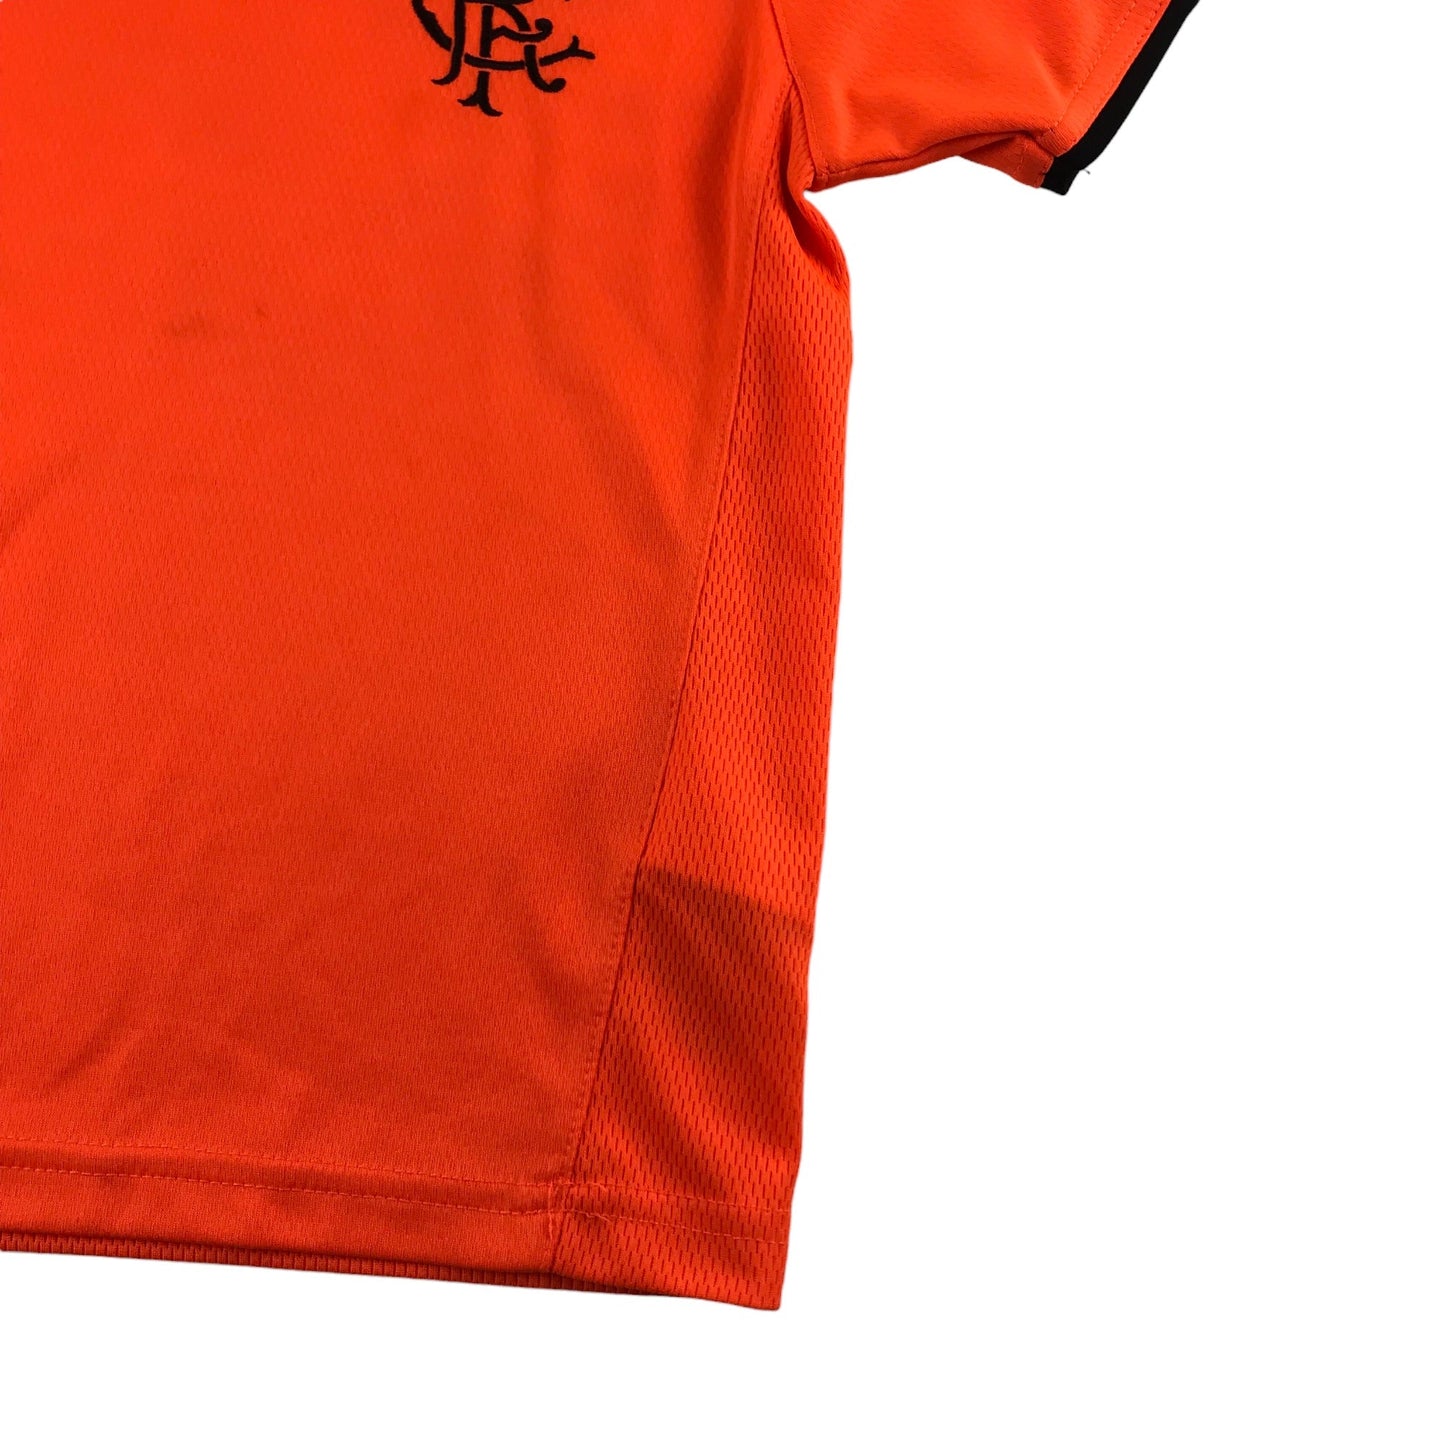 Hummel Rangers FC Football Top Age 8-10 Bright Orange Short Sleeve Training Top